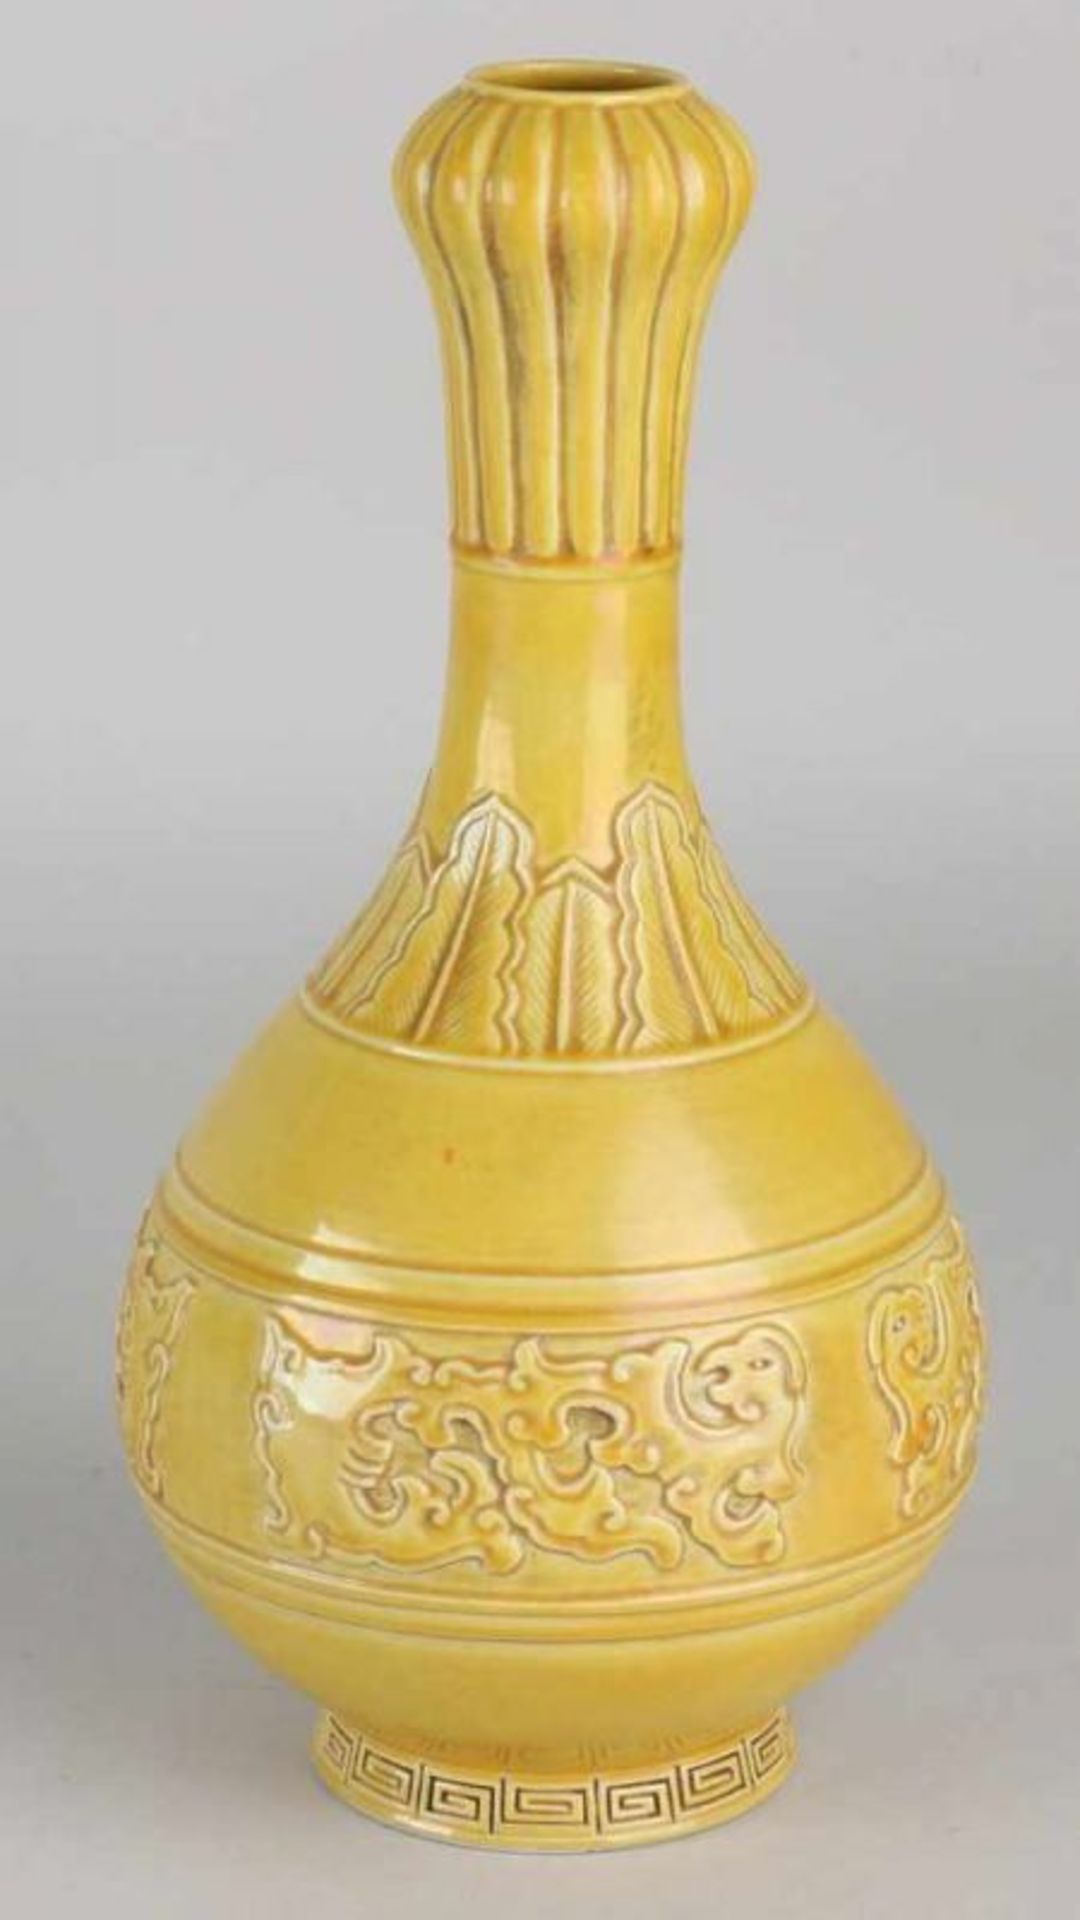 Ancient Chinese porcelain knob vase with ocher-yellow glaze, dragon decor and bottom mark.